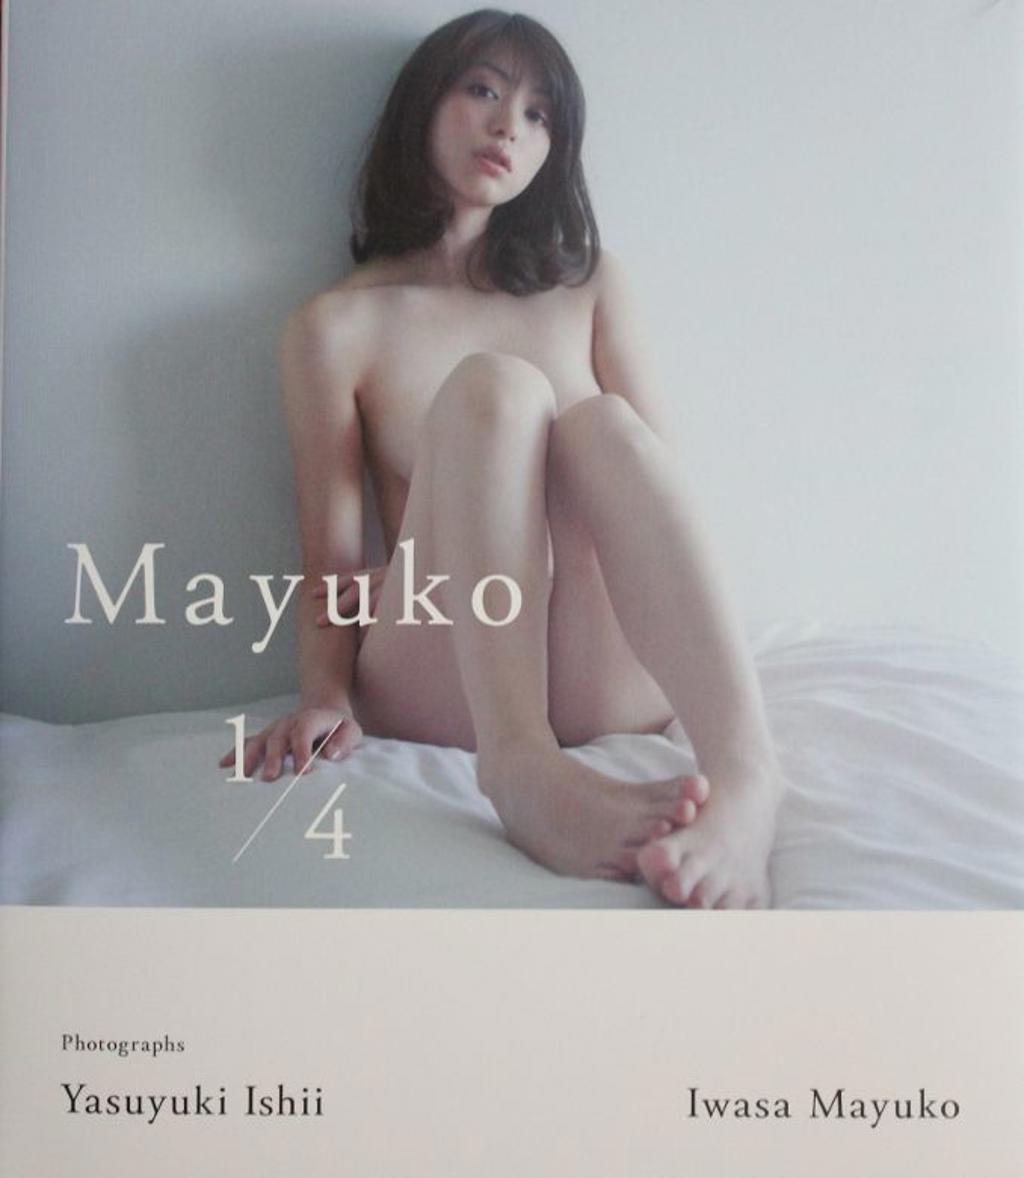 岩佐真悠子.「Mayuko 14」